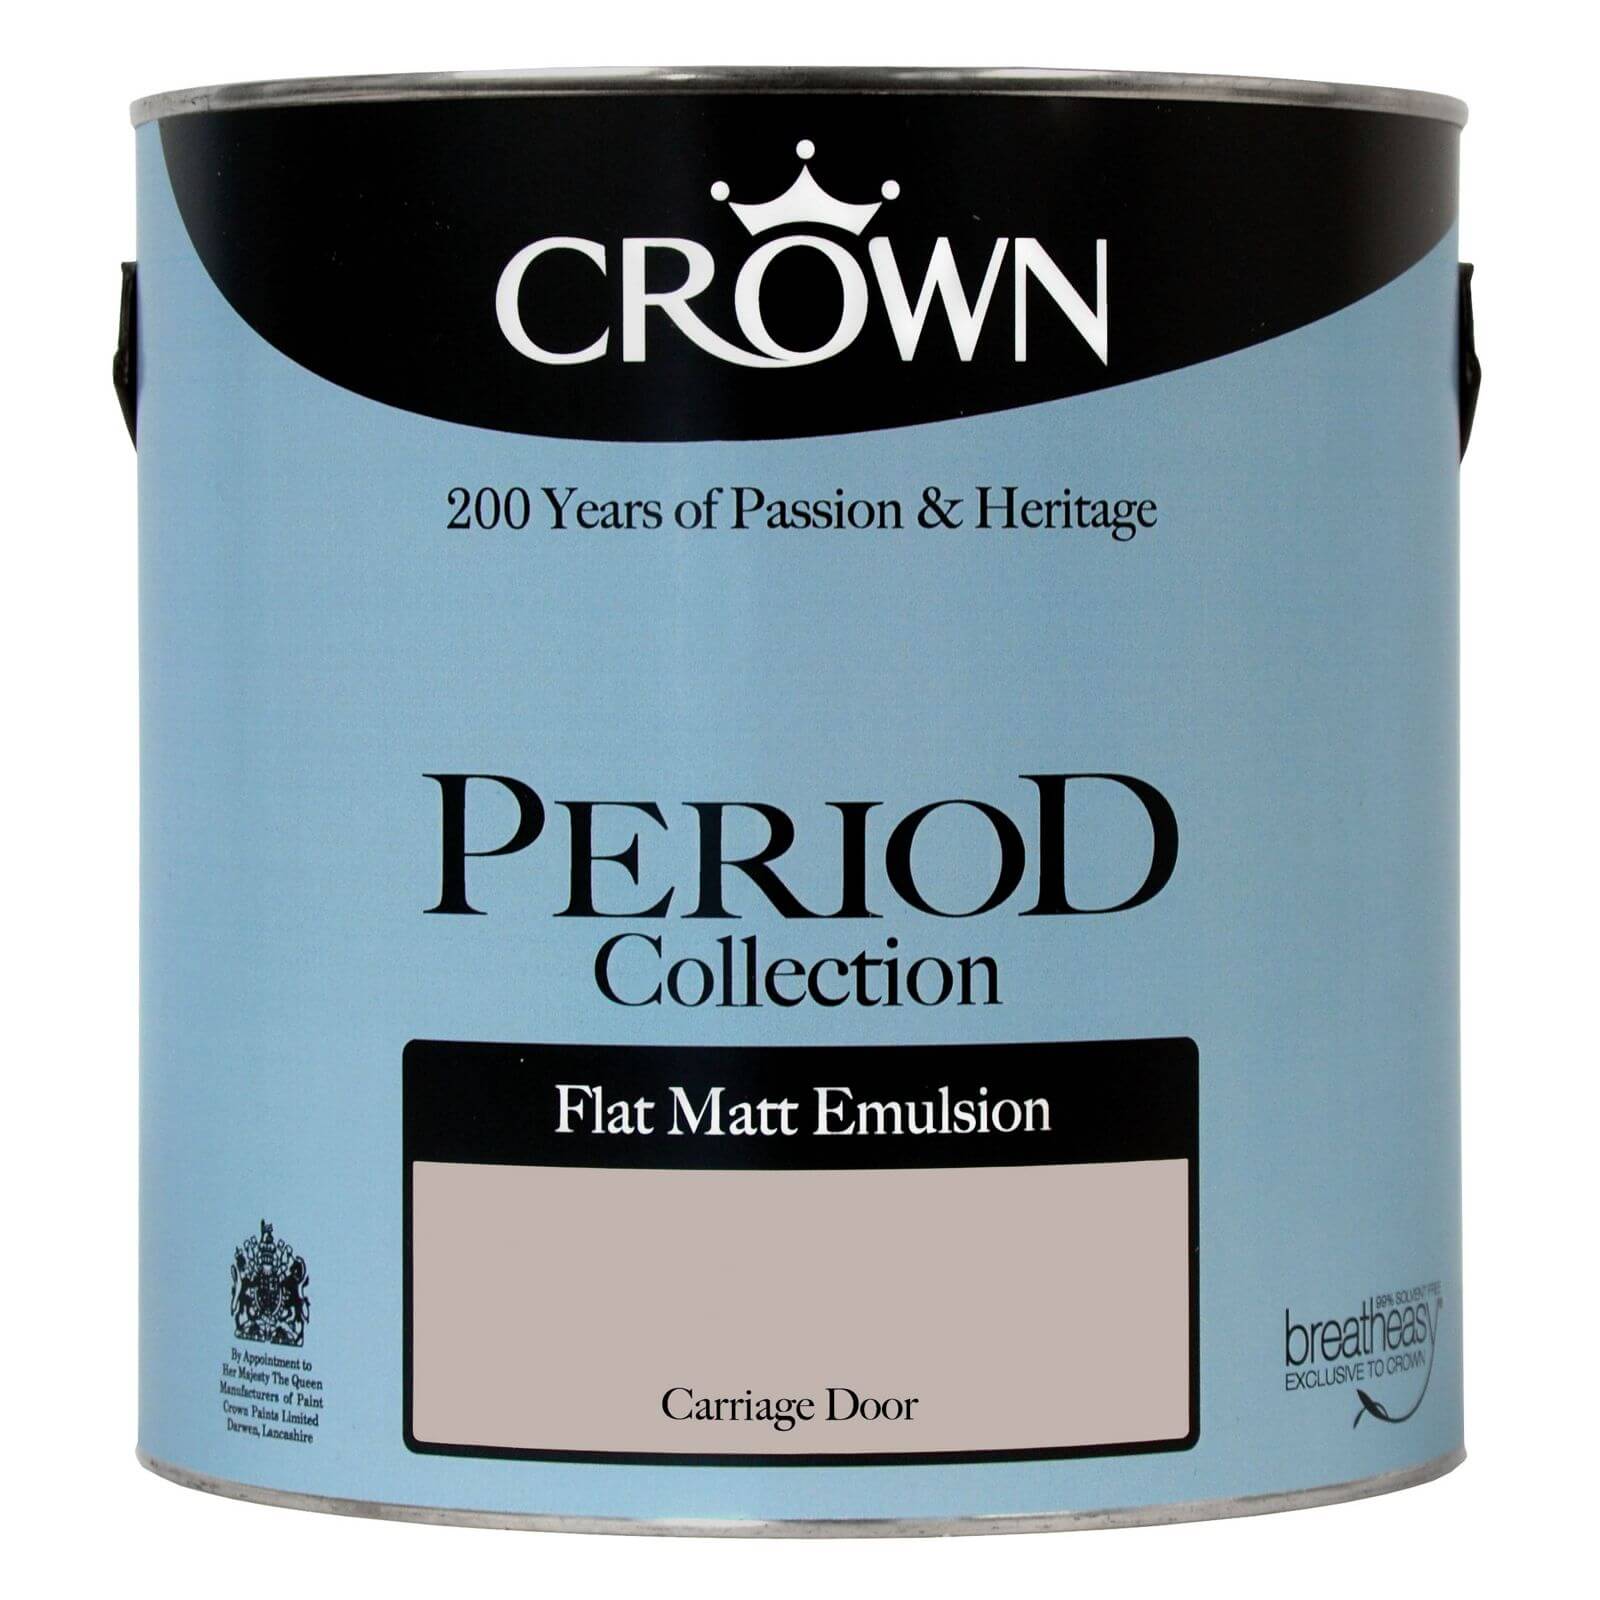 Crown Period Collection Carriage Door - Flat Matt Emulsion Paint - 2.5L